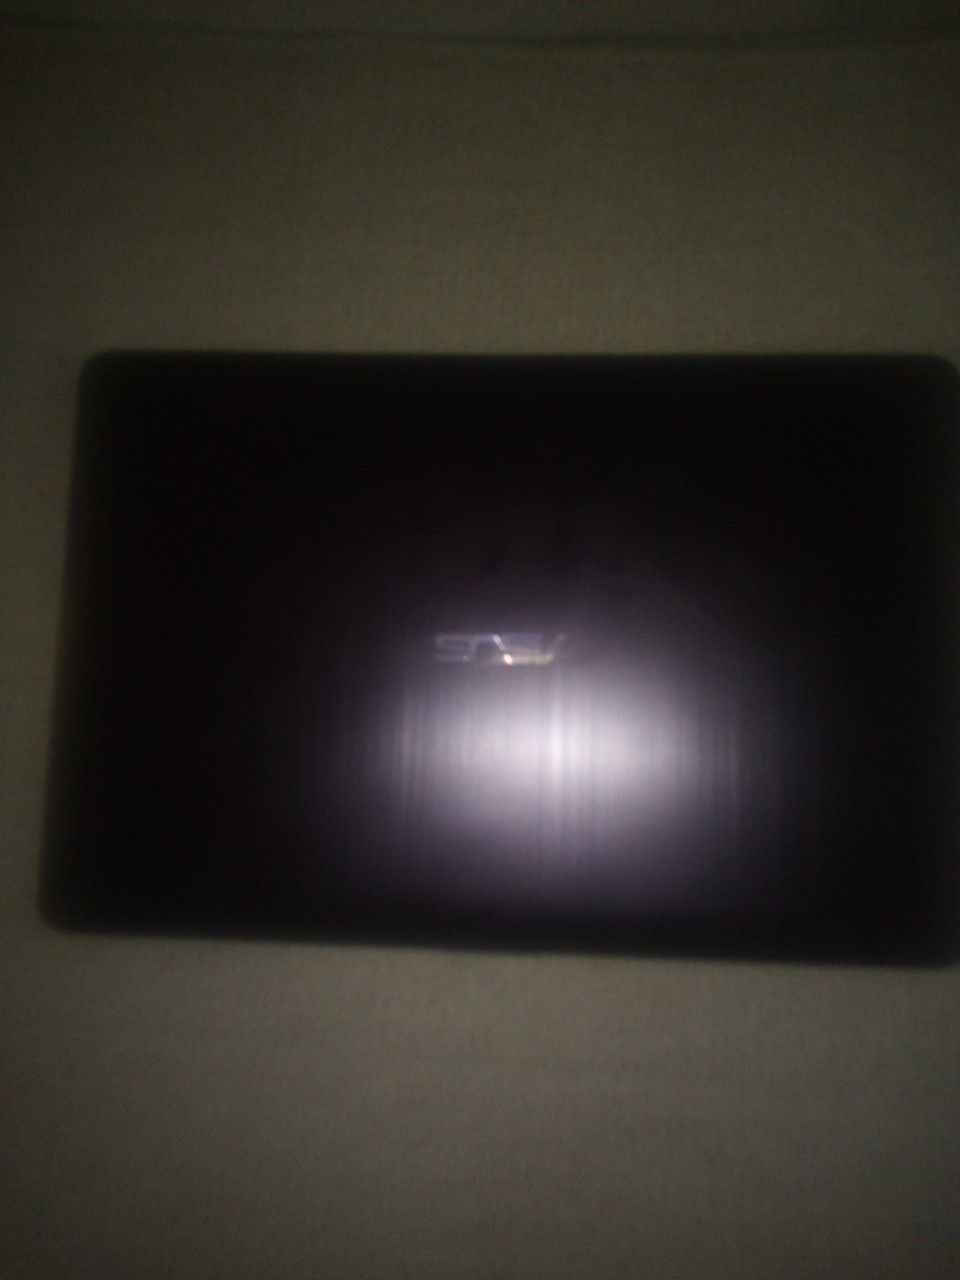 Asus laptop model x541n